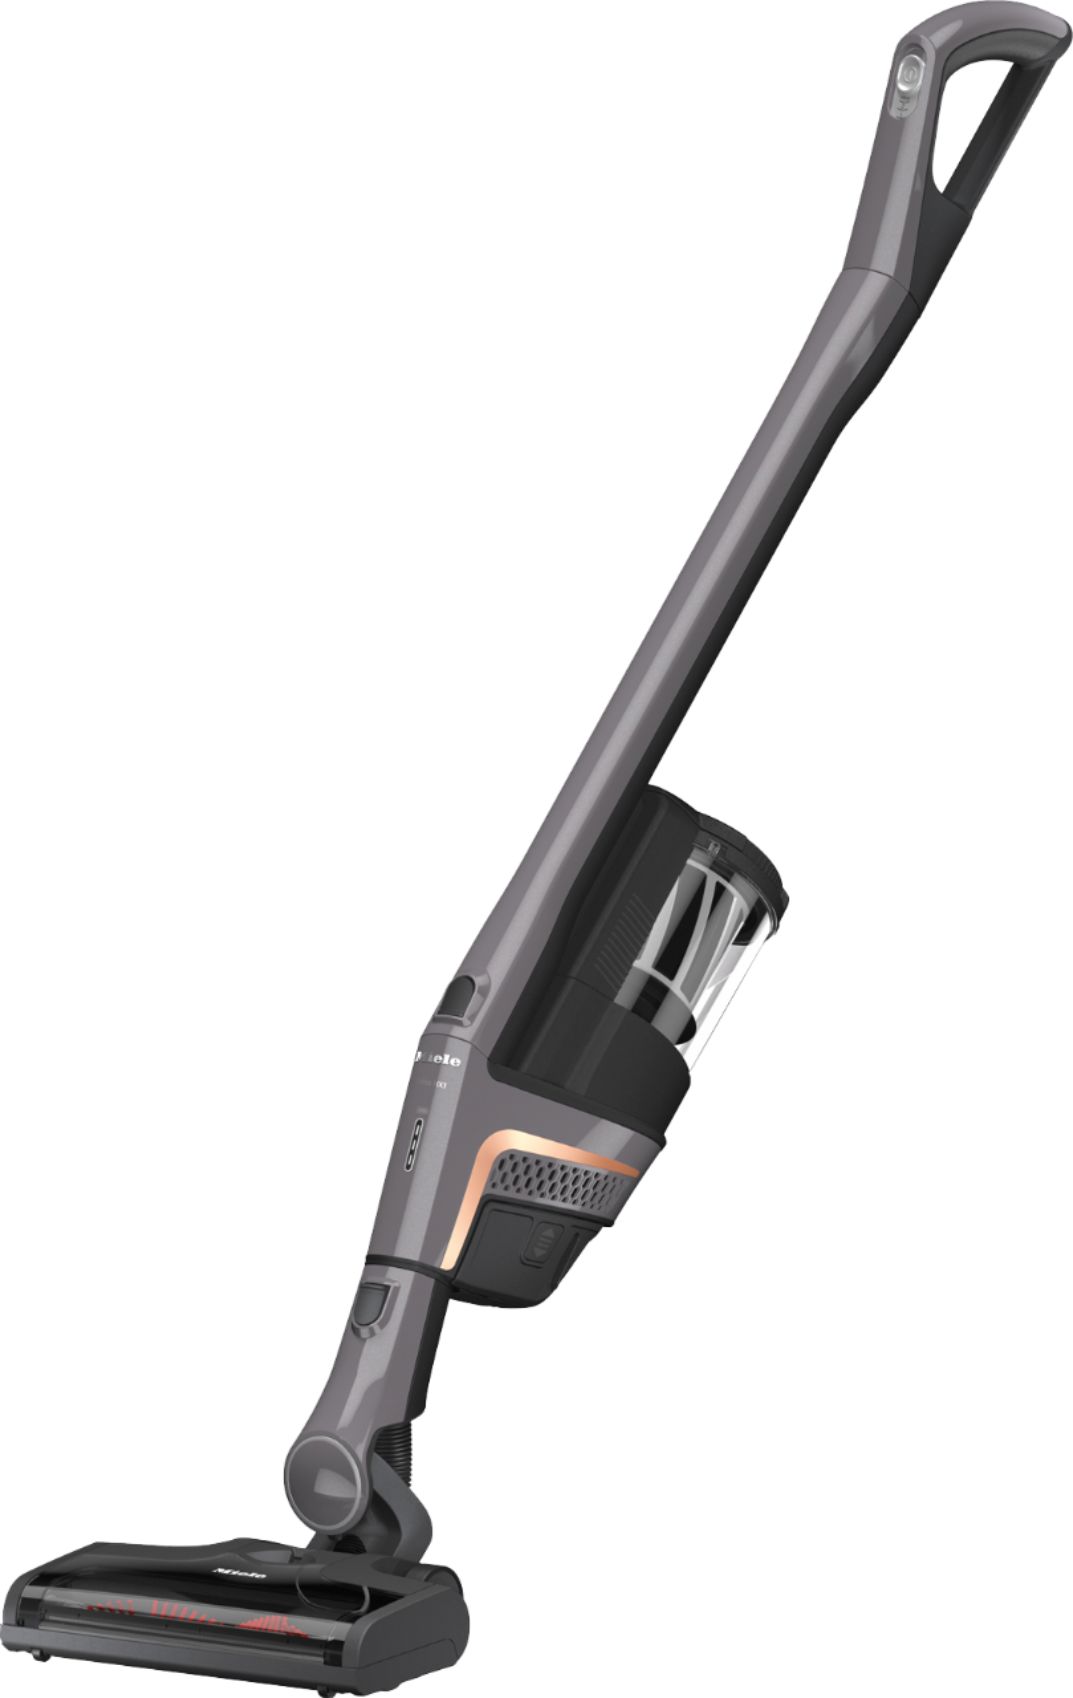 Angle View: Samsung - Jet™ 60 Pet Cordless Stick Vacuum - Rose Gold